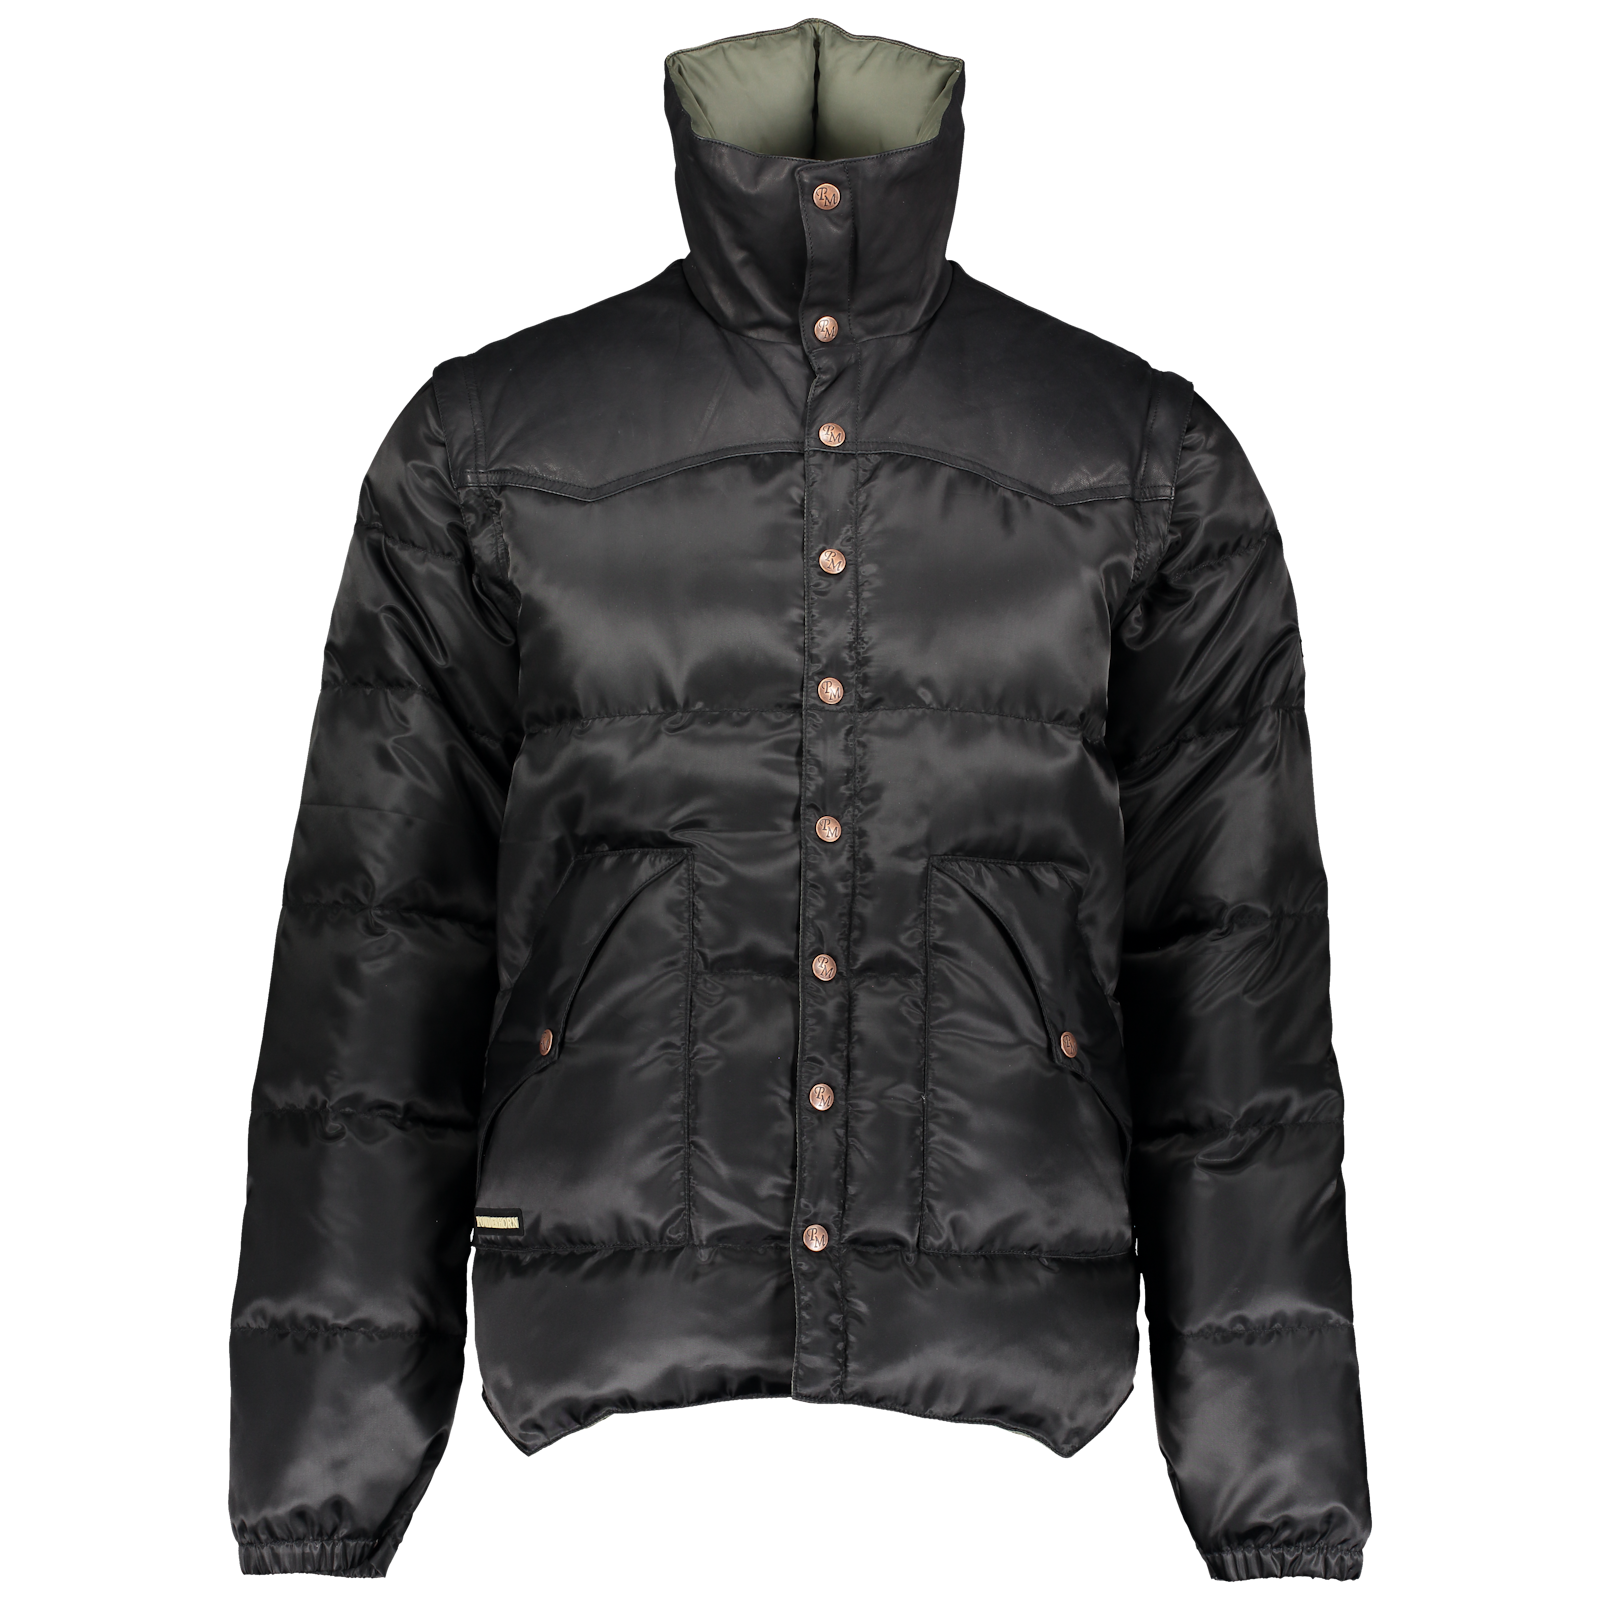 Powderhorn Jacket The Original Leather